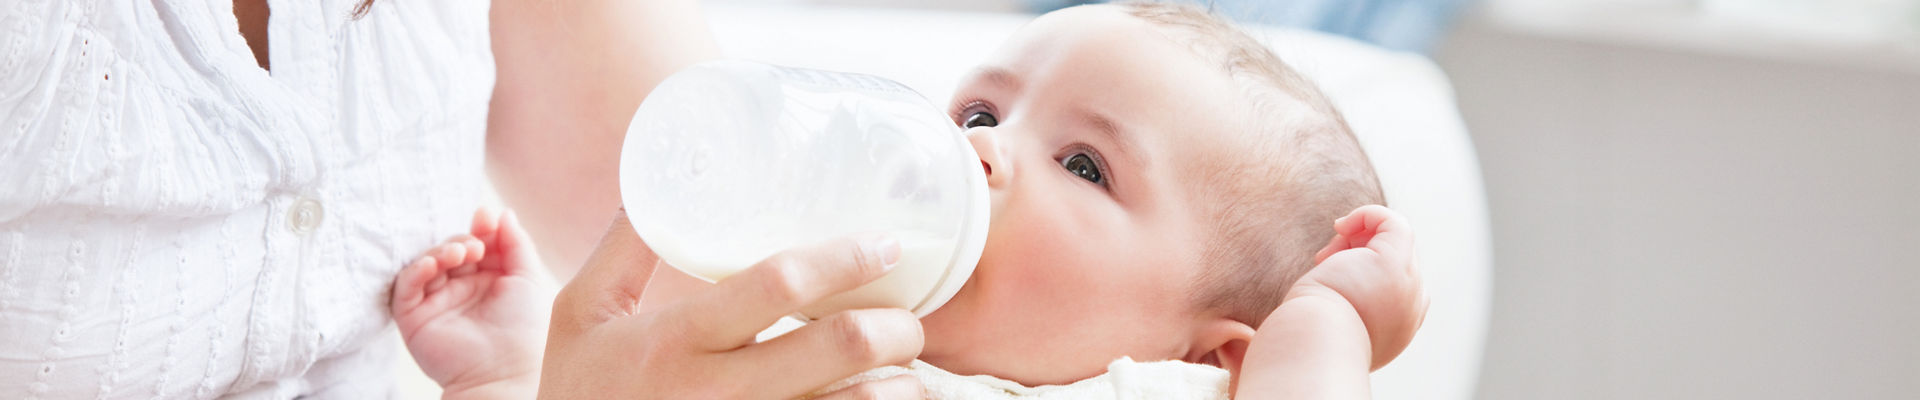 Mother feeding infant from baby bottle